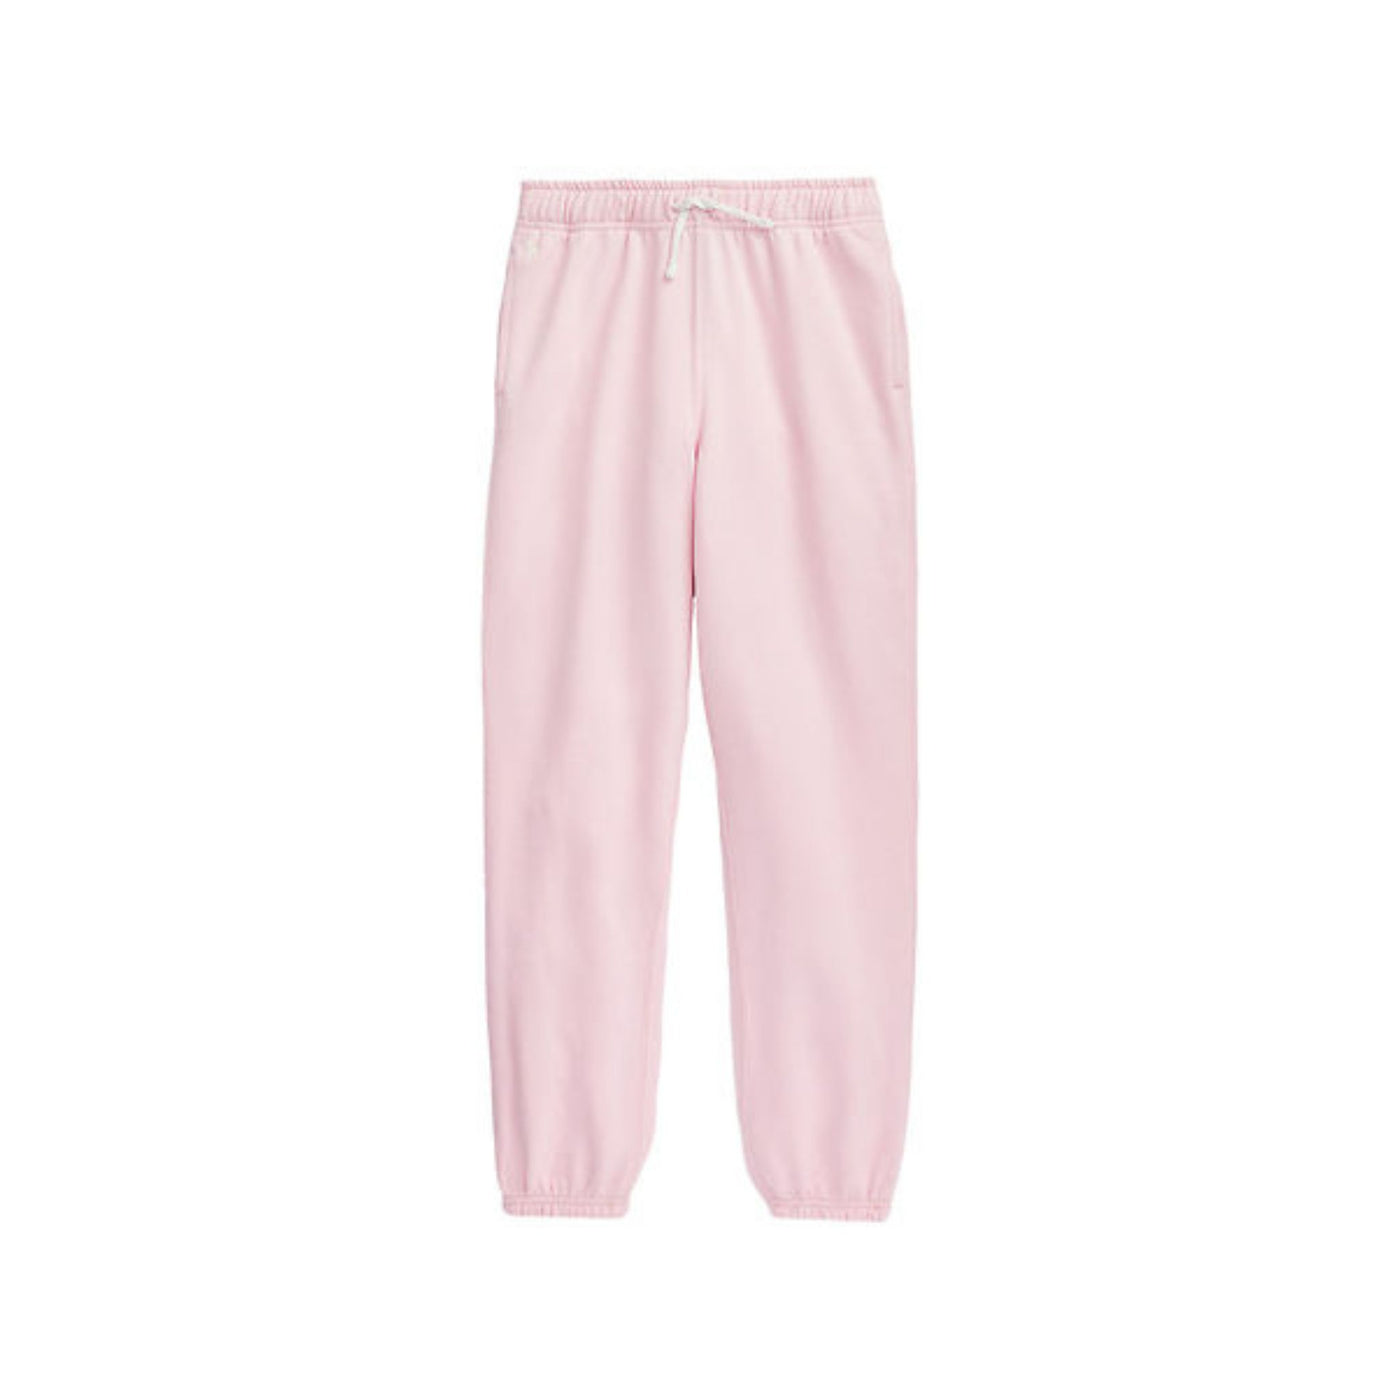 Pantalone da bambina rosa vista frontale